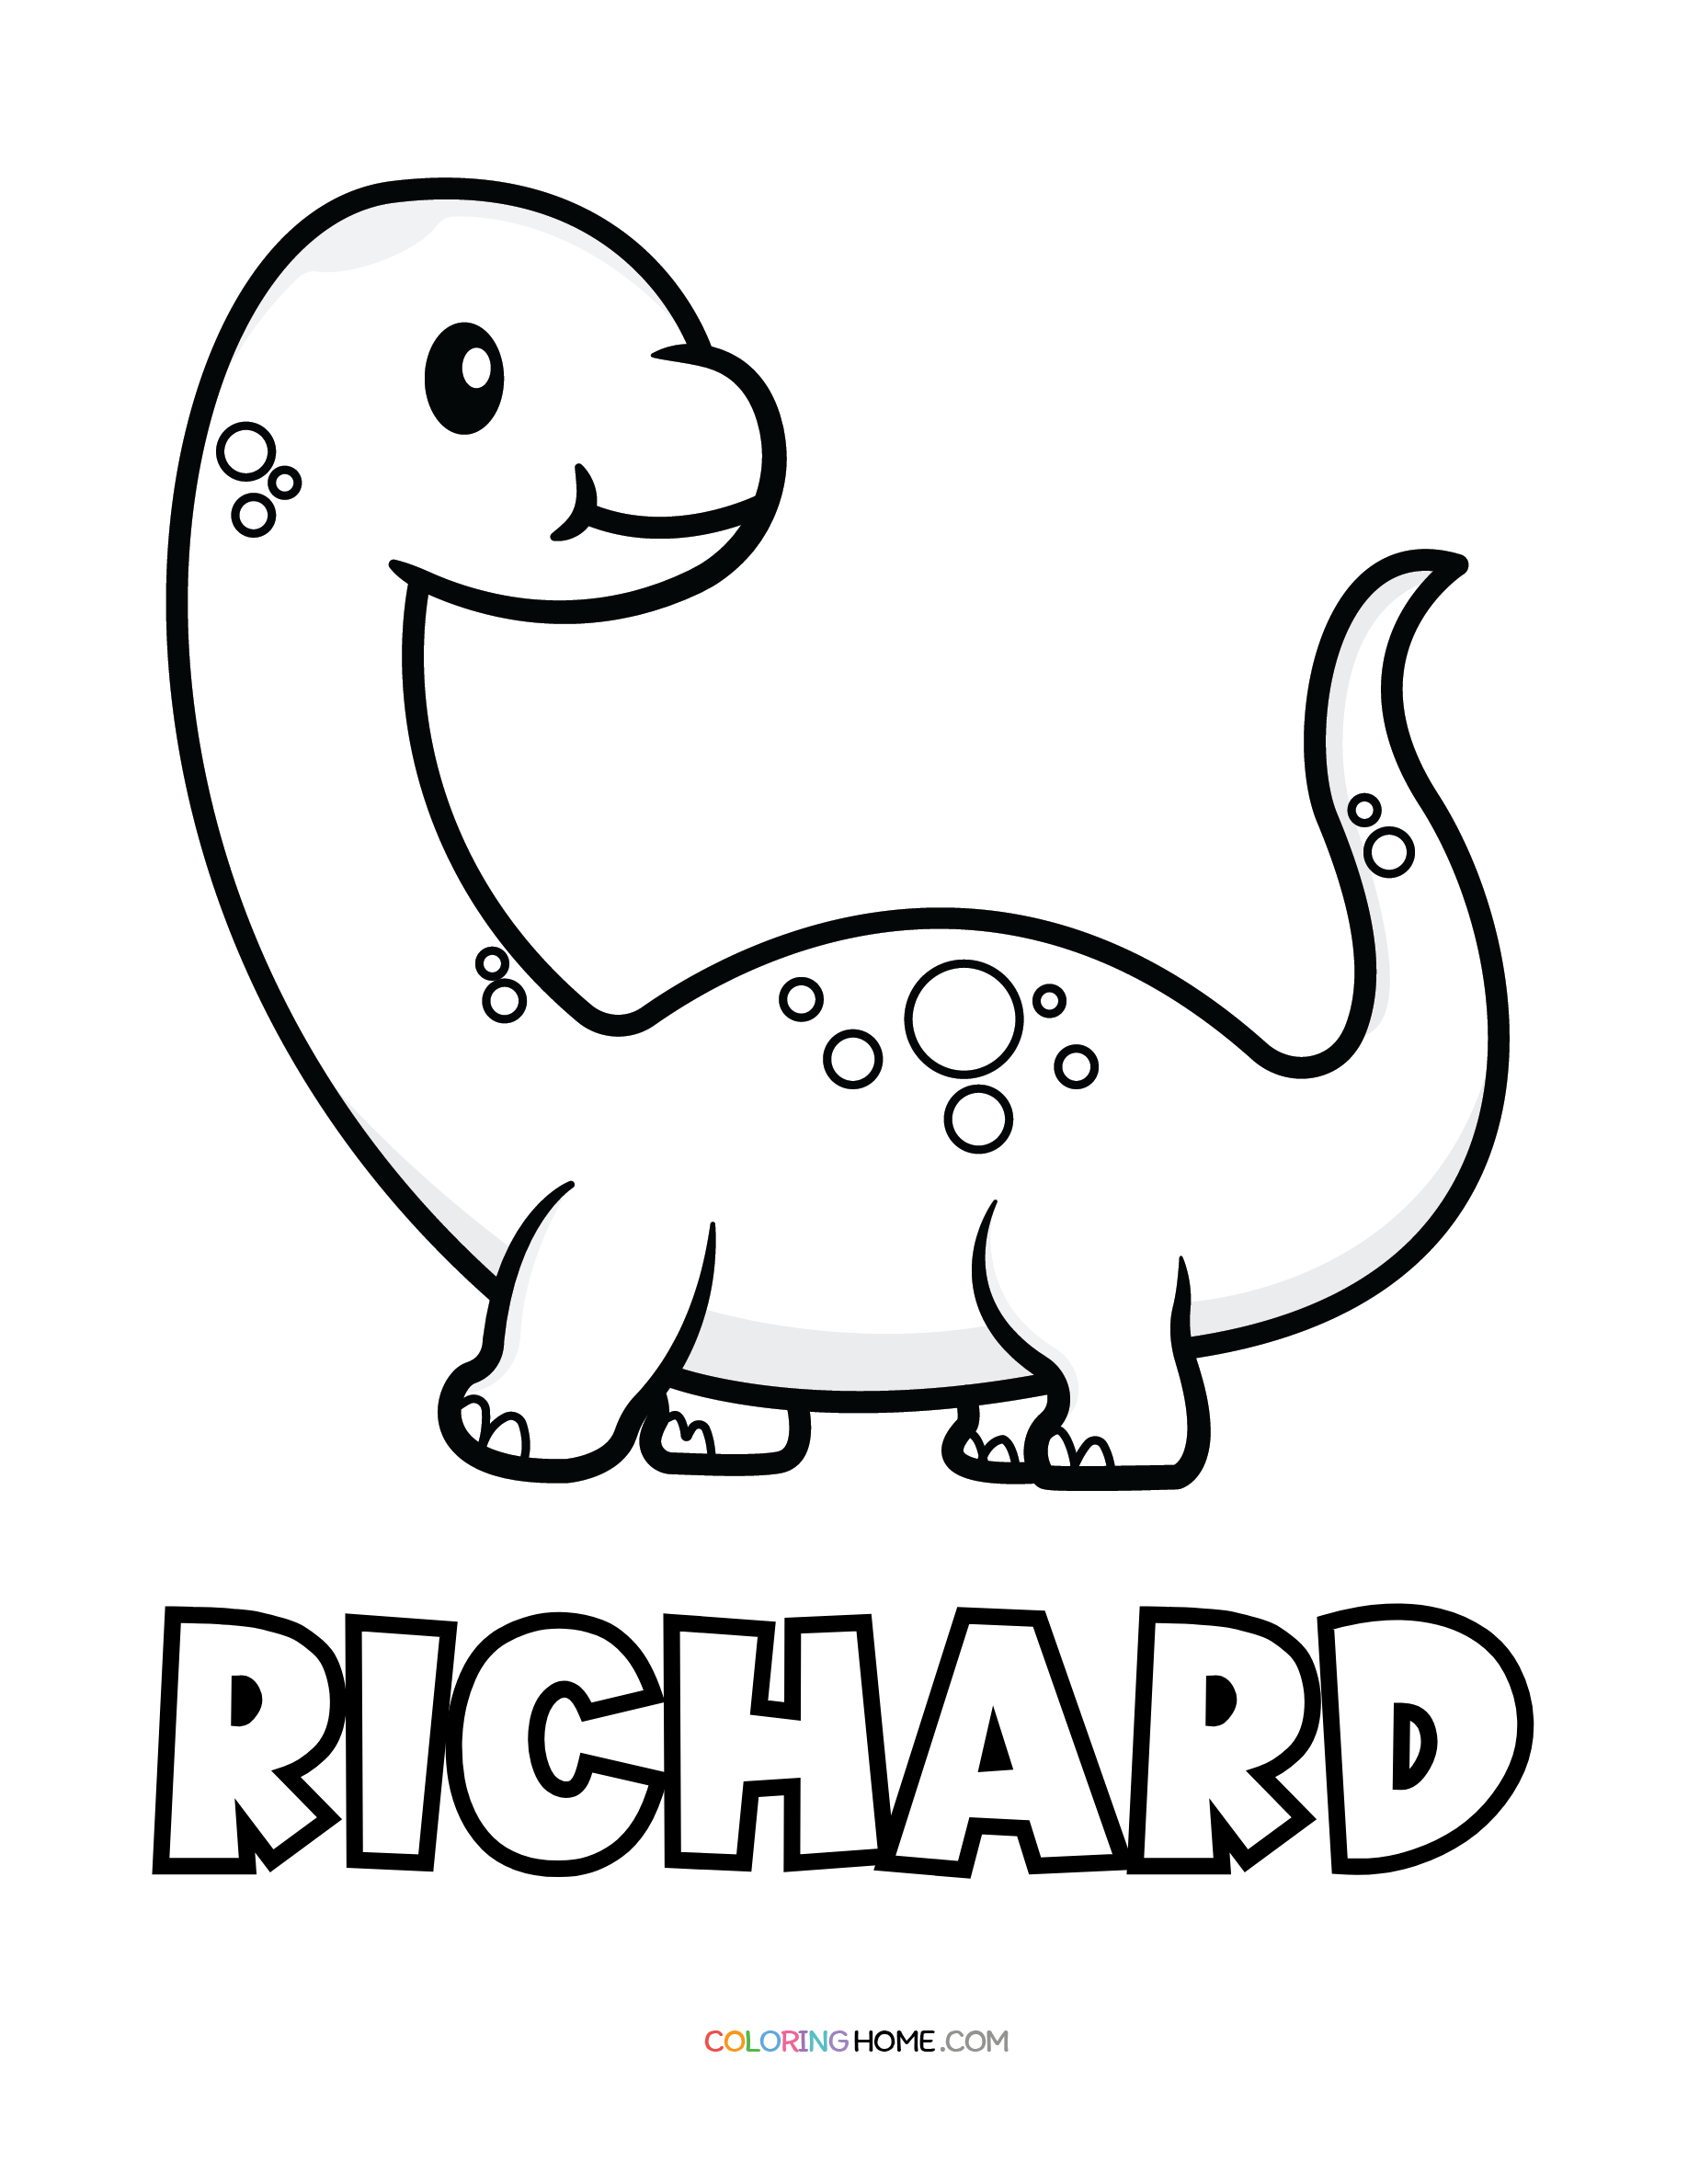 Richard dinosaur coloring page